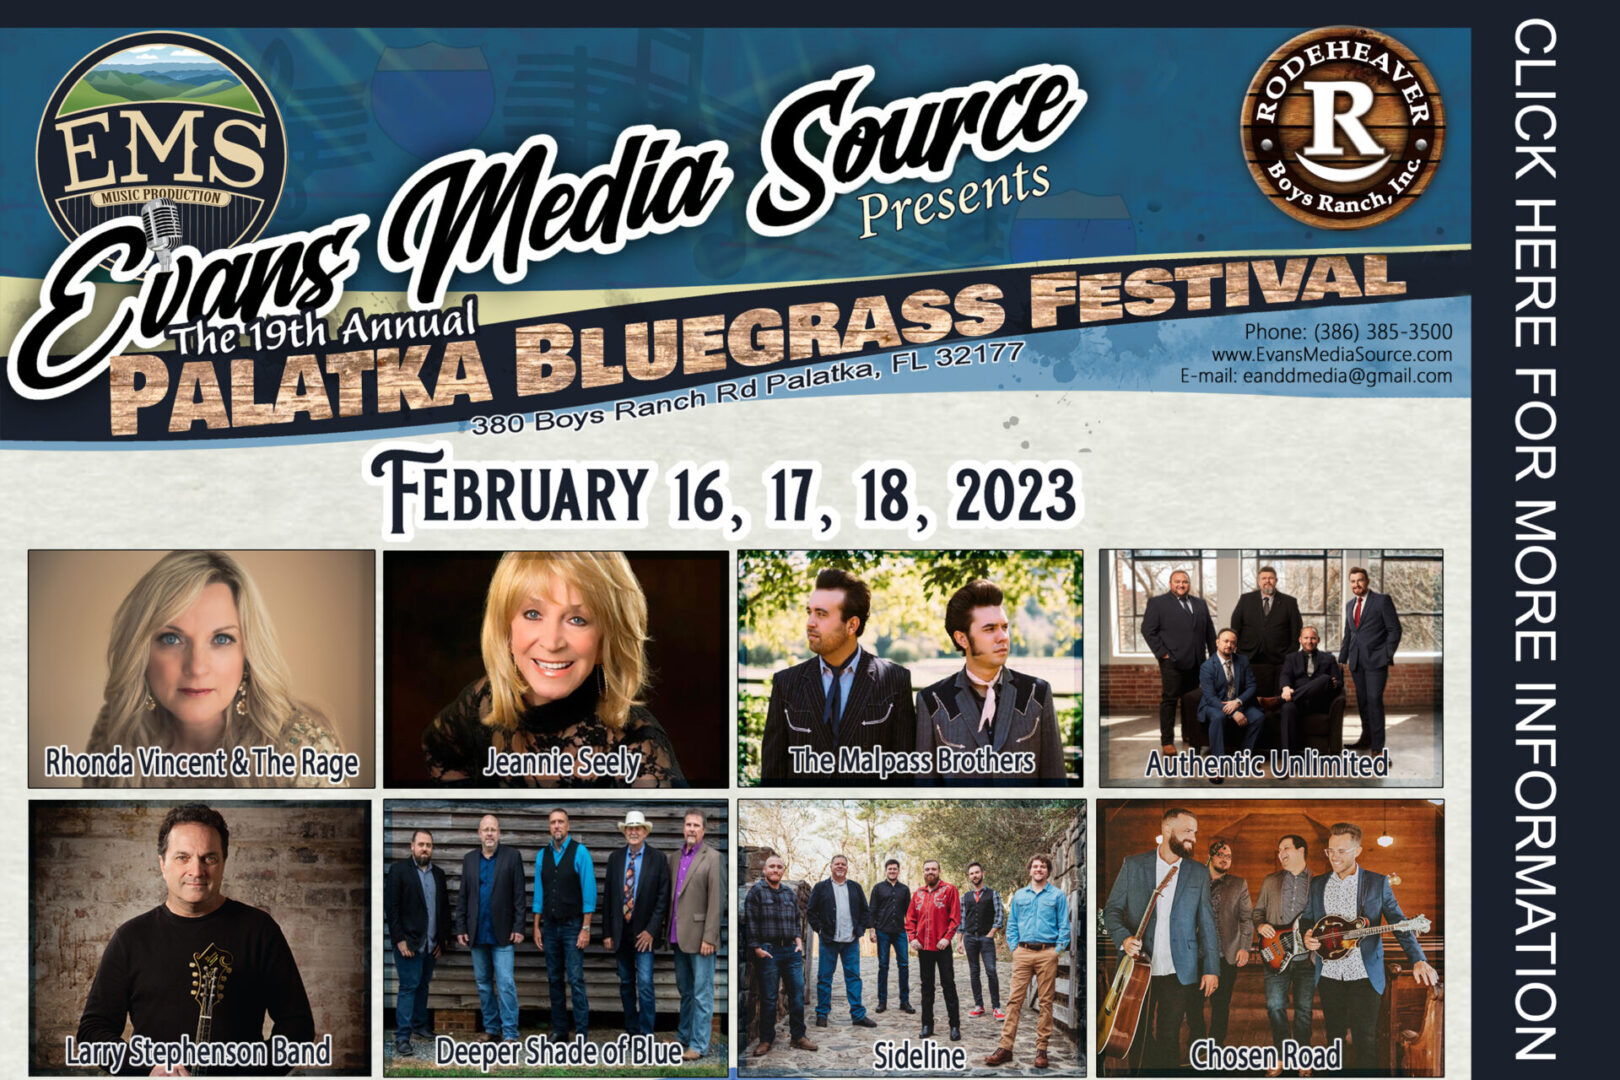 Palatka Bluegrass festival banner and poster